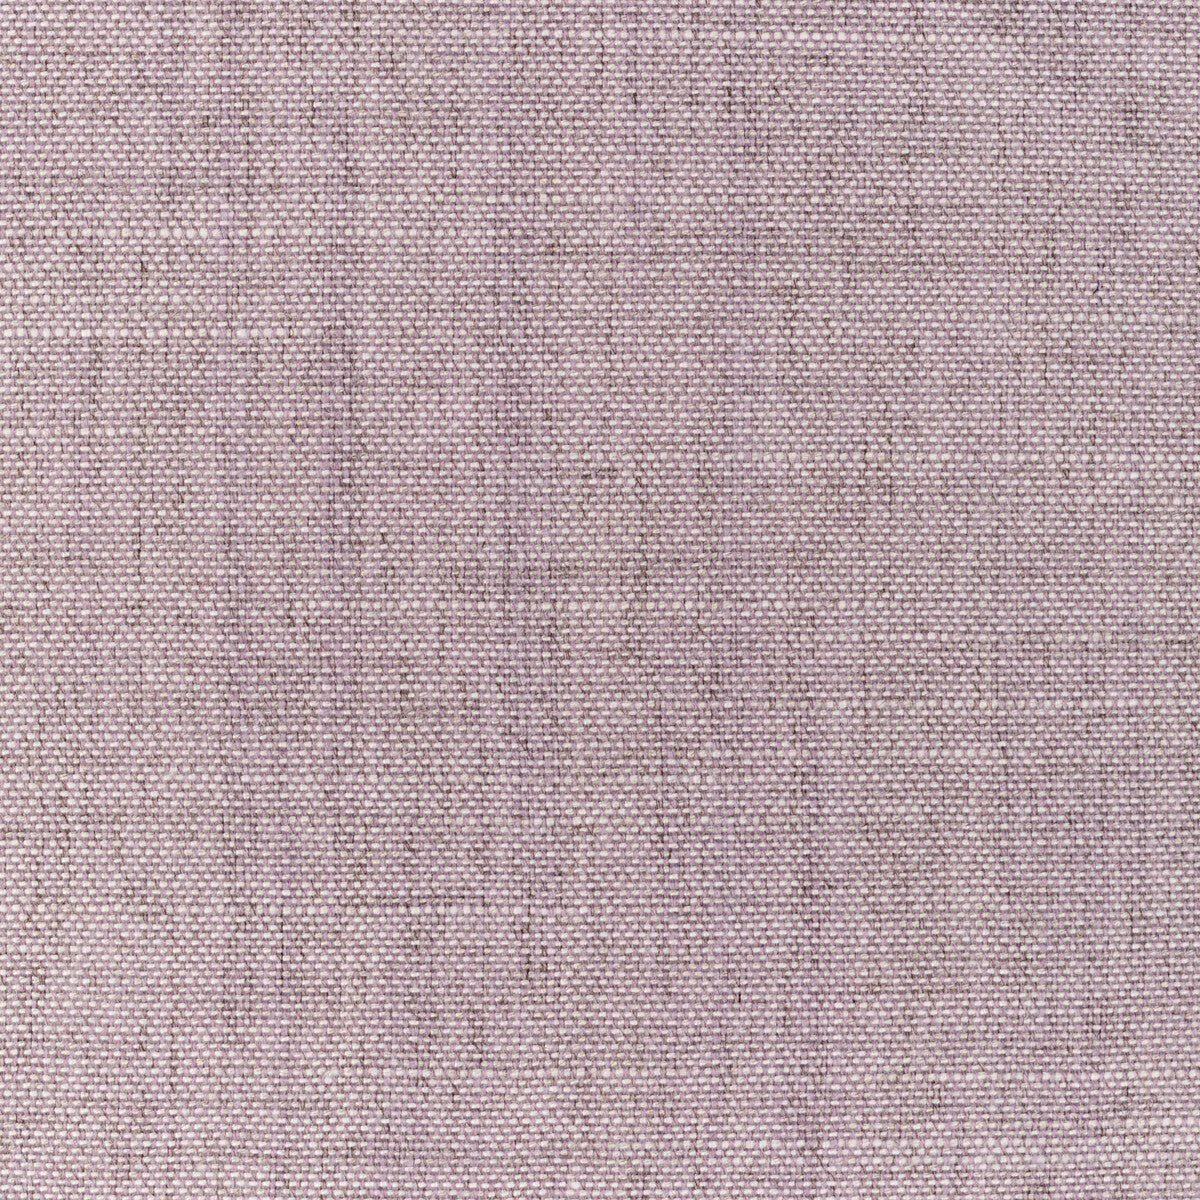 Kravet Smart fabric in 36112-110 color - pattern 36112.110.0 - by Kravet Smart in the Performance Kravetarmor collection